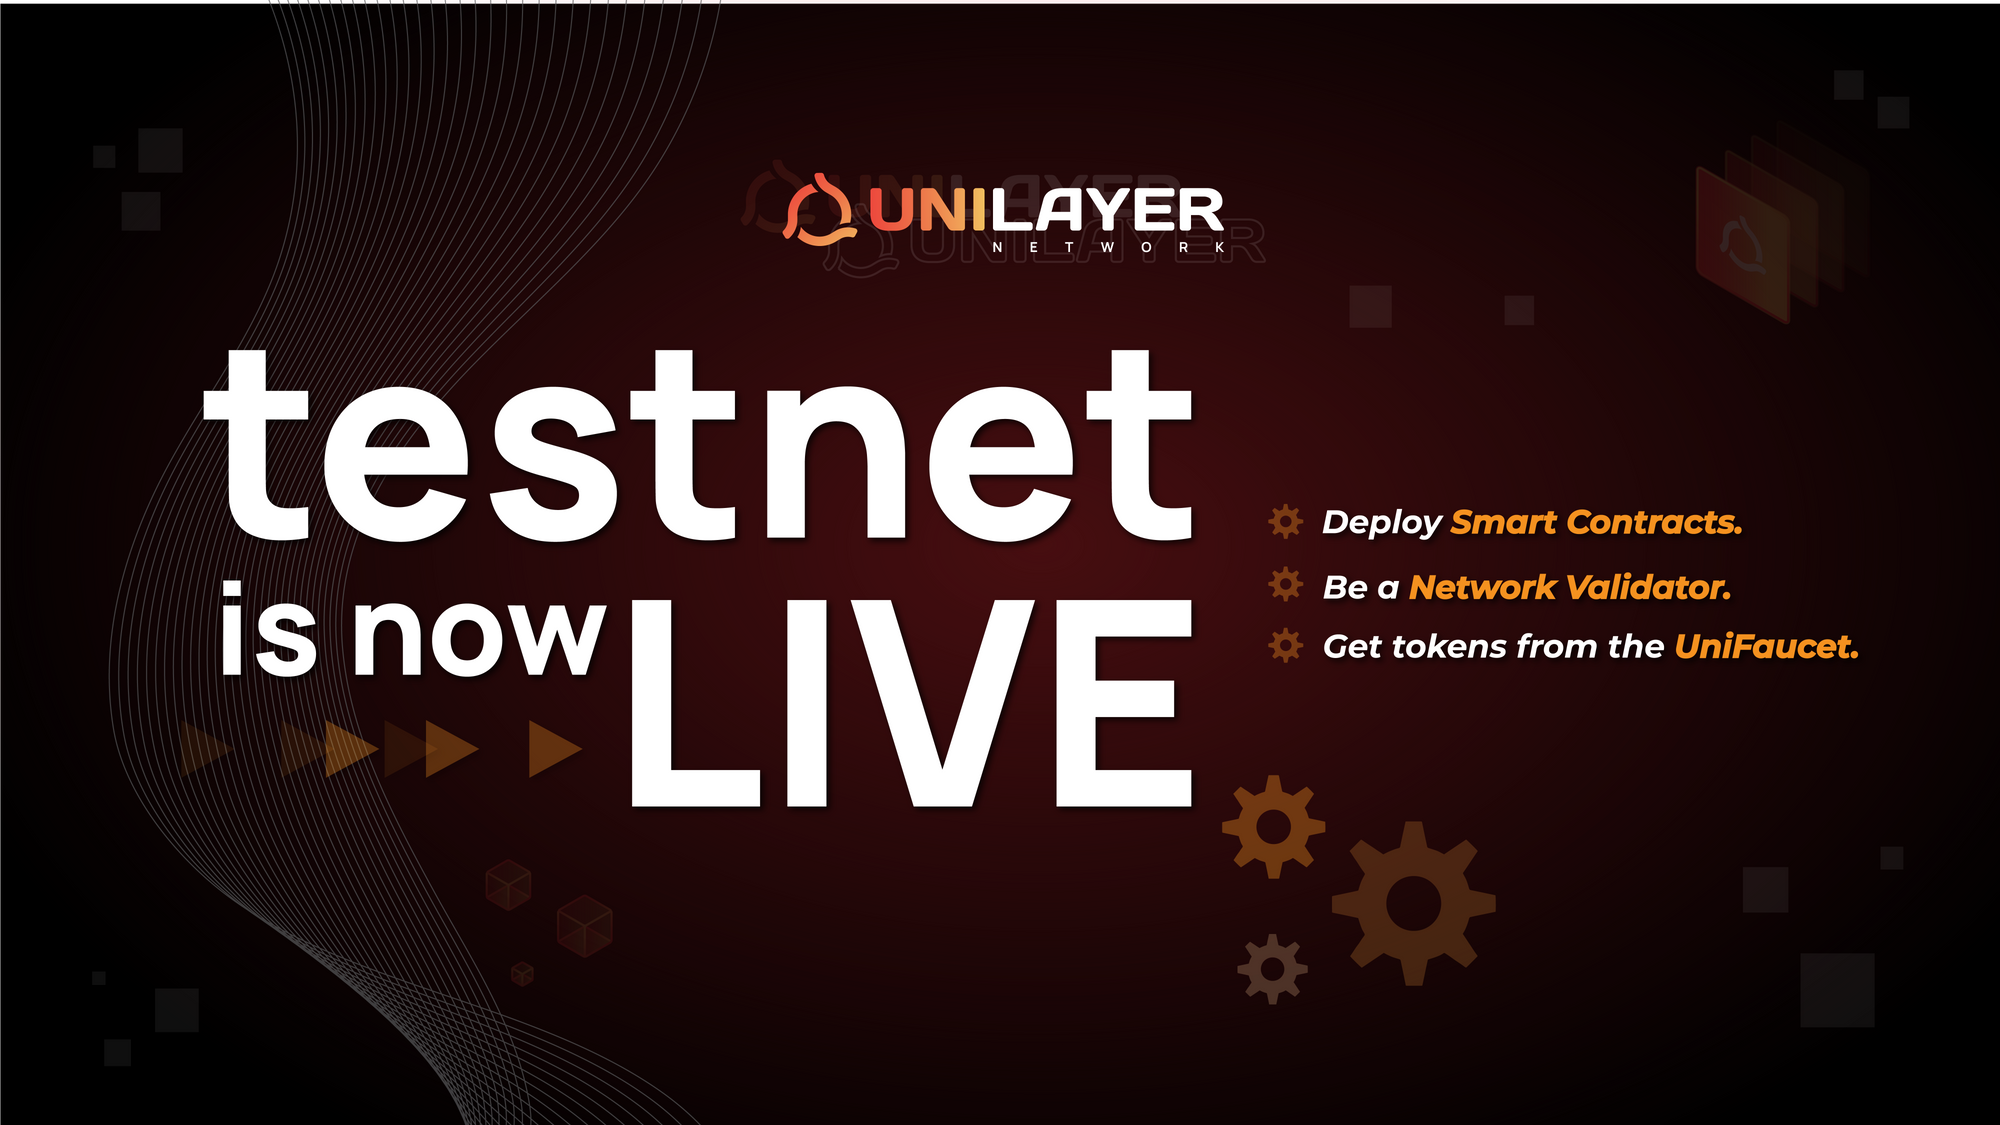 UniLayer’s Testnet Launch Met With Overwhelming Demand (Over 2,000 Beta Testers)